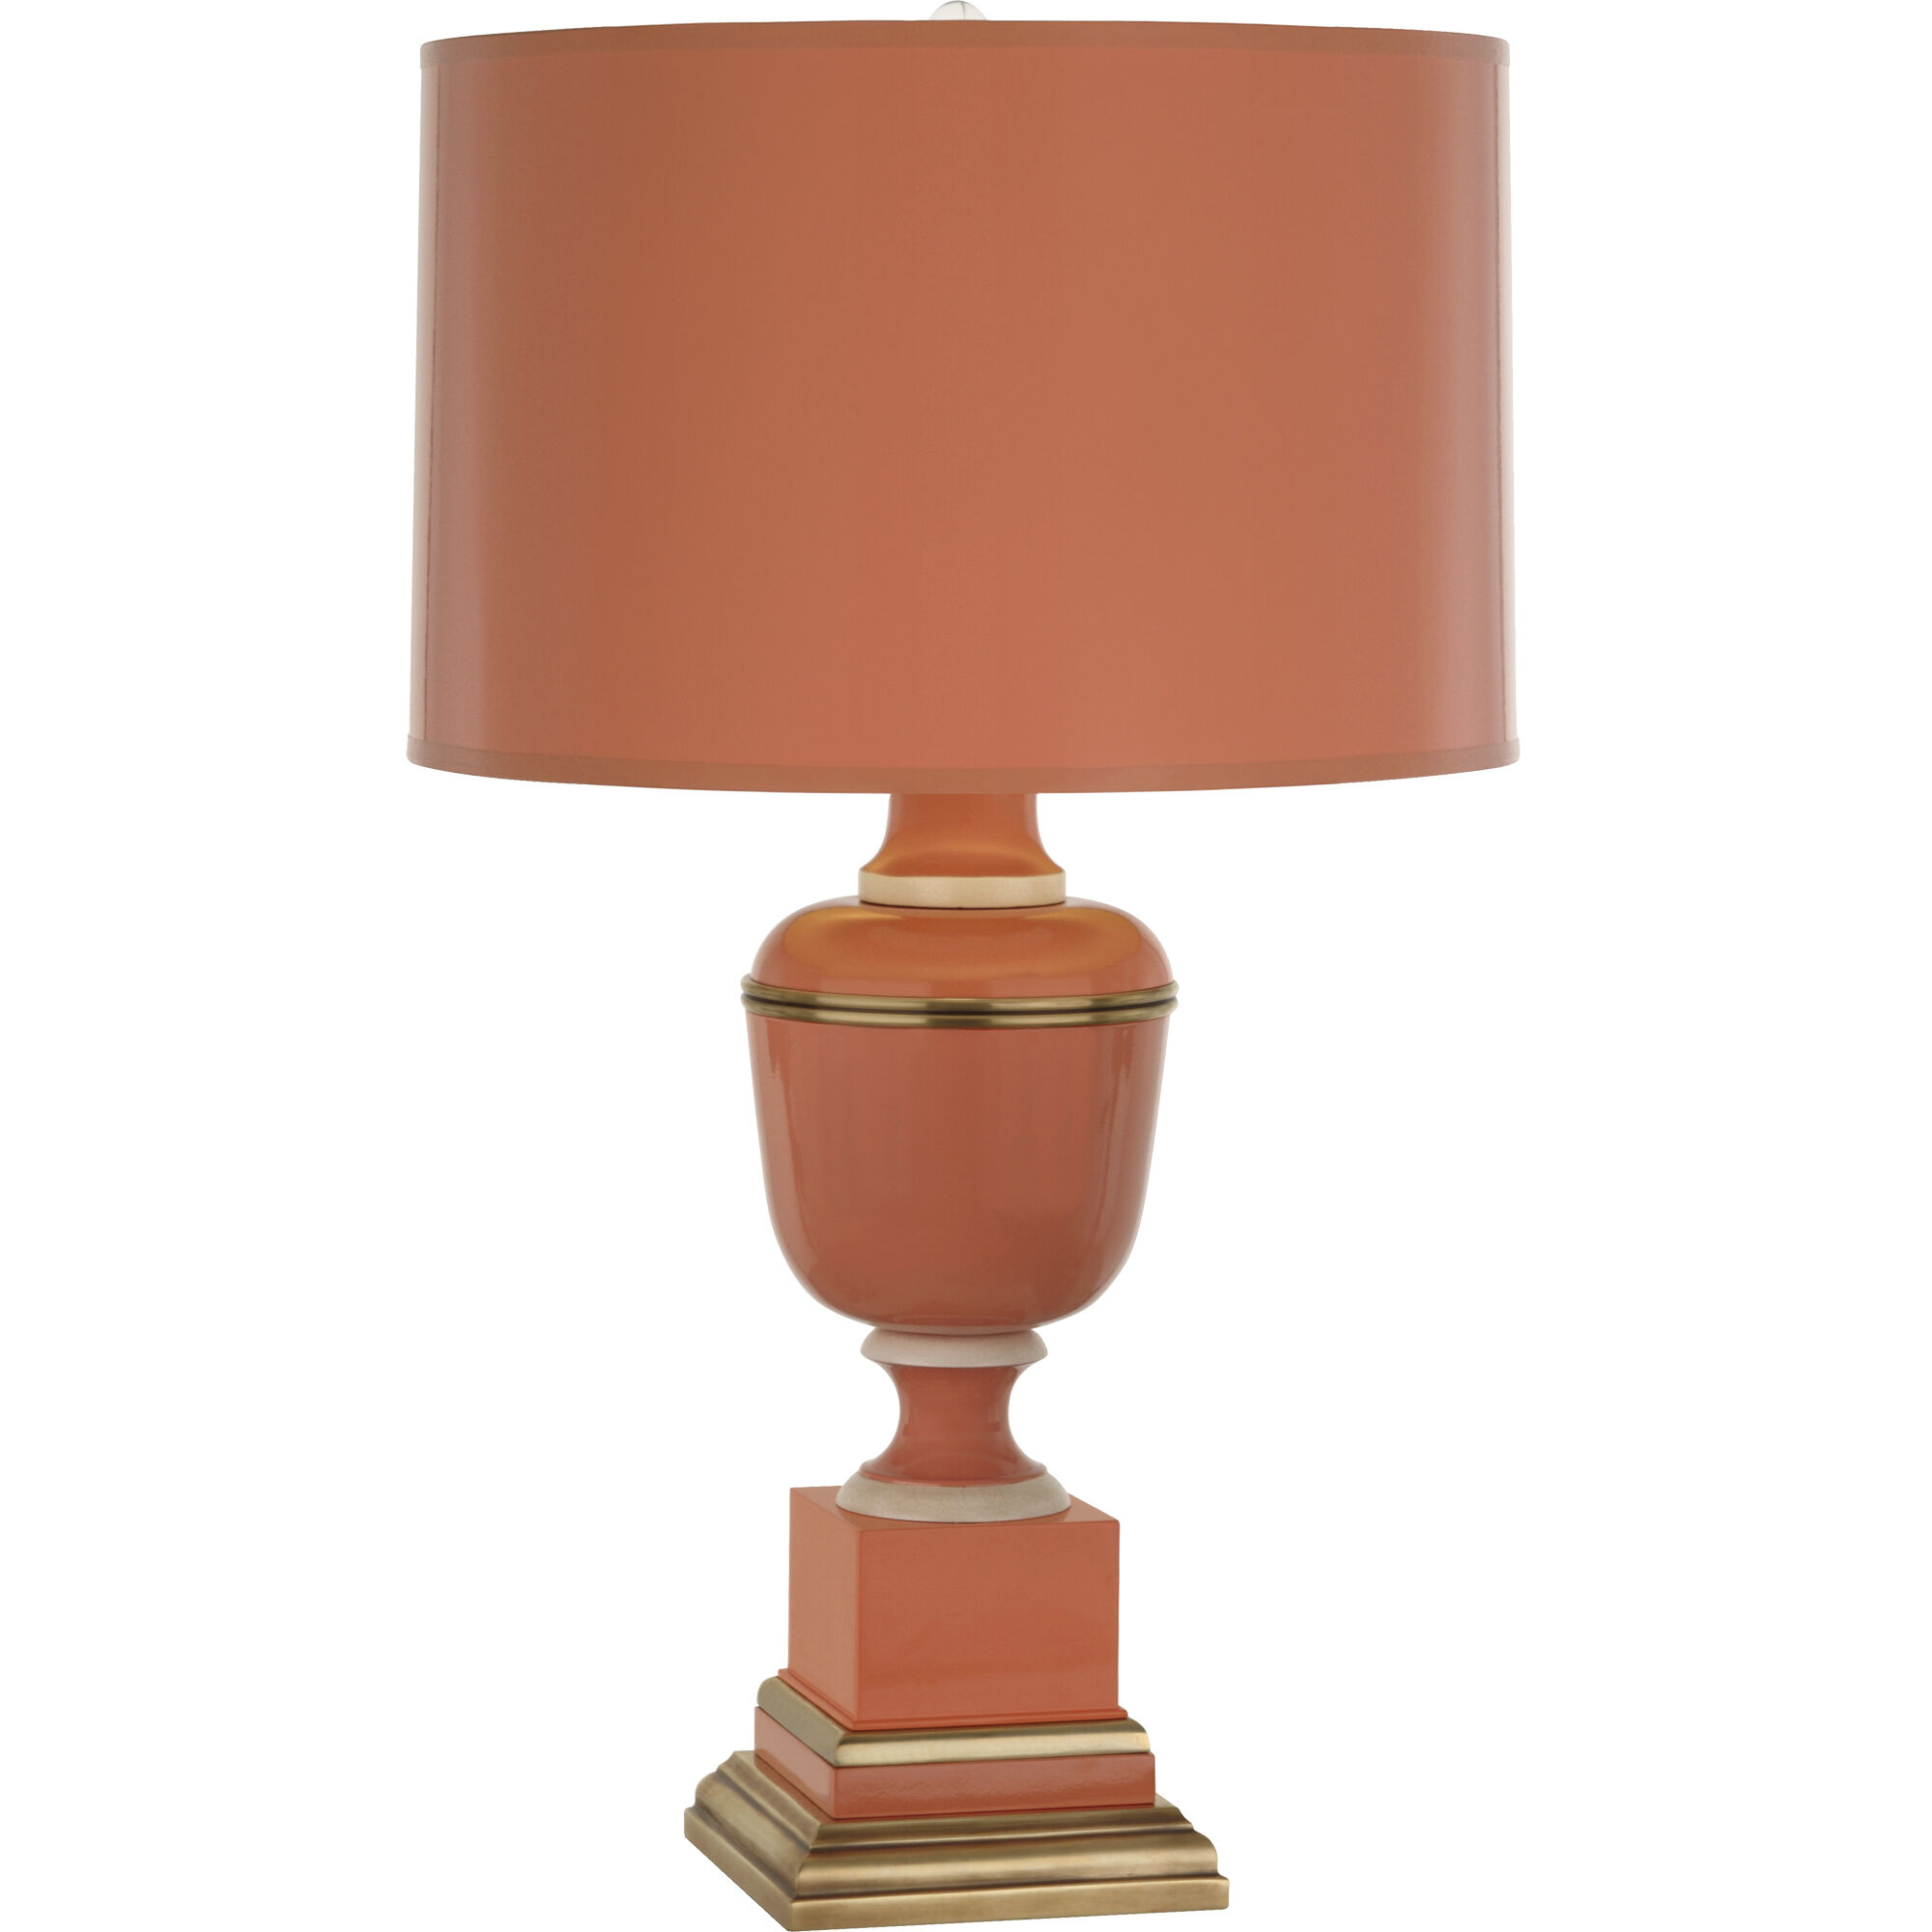 Annika Table Lamp